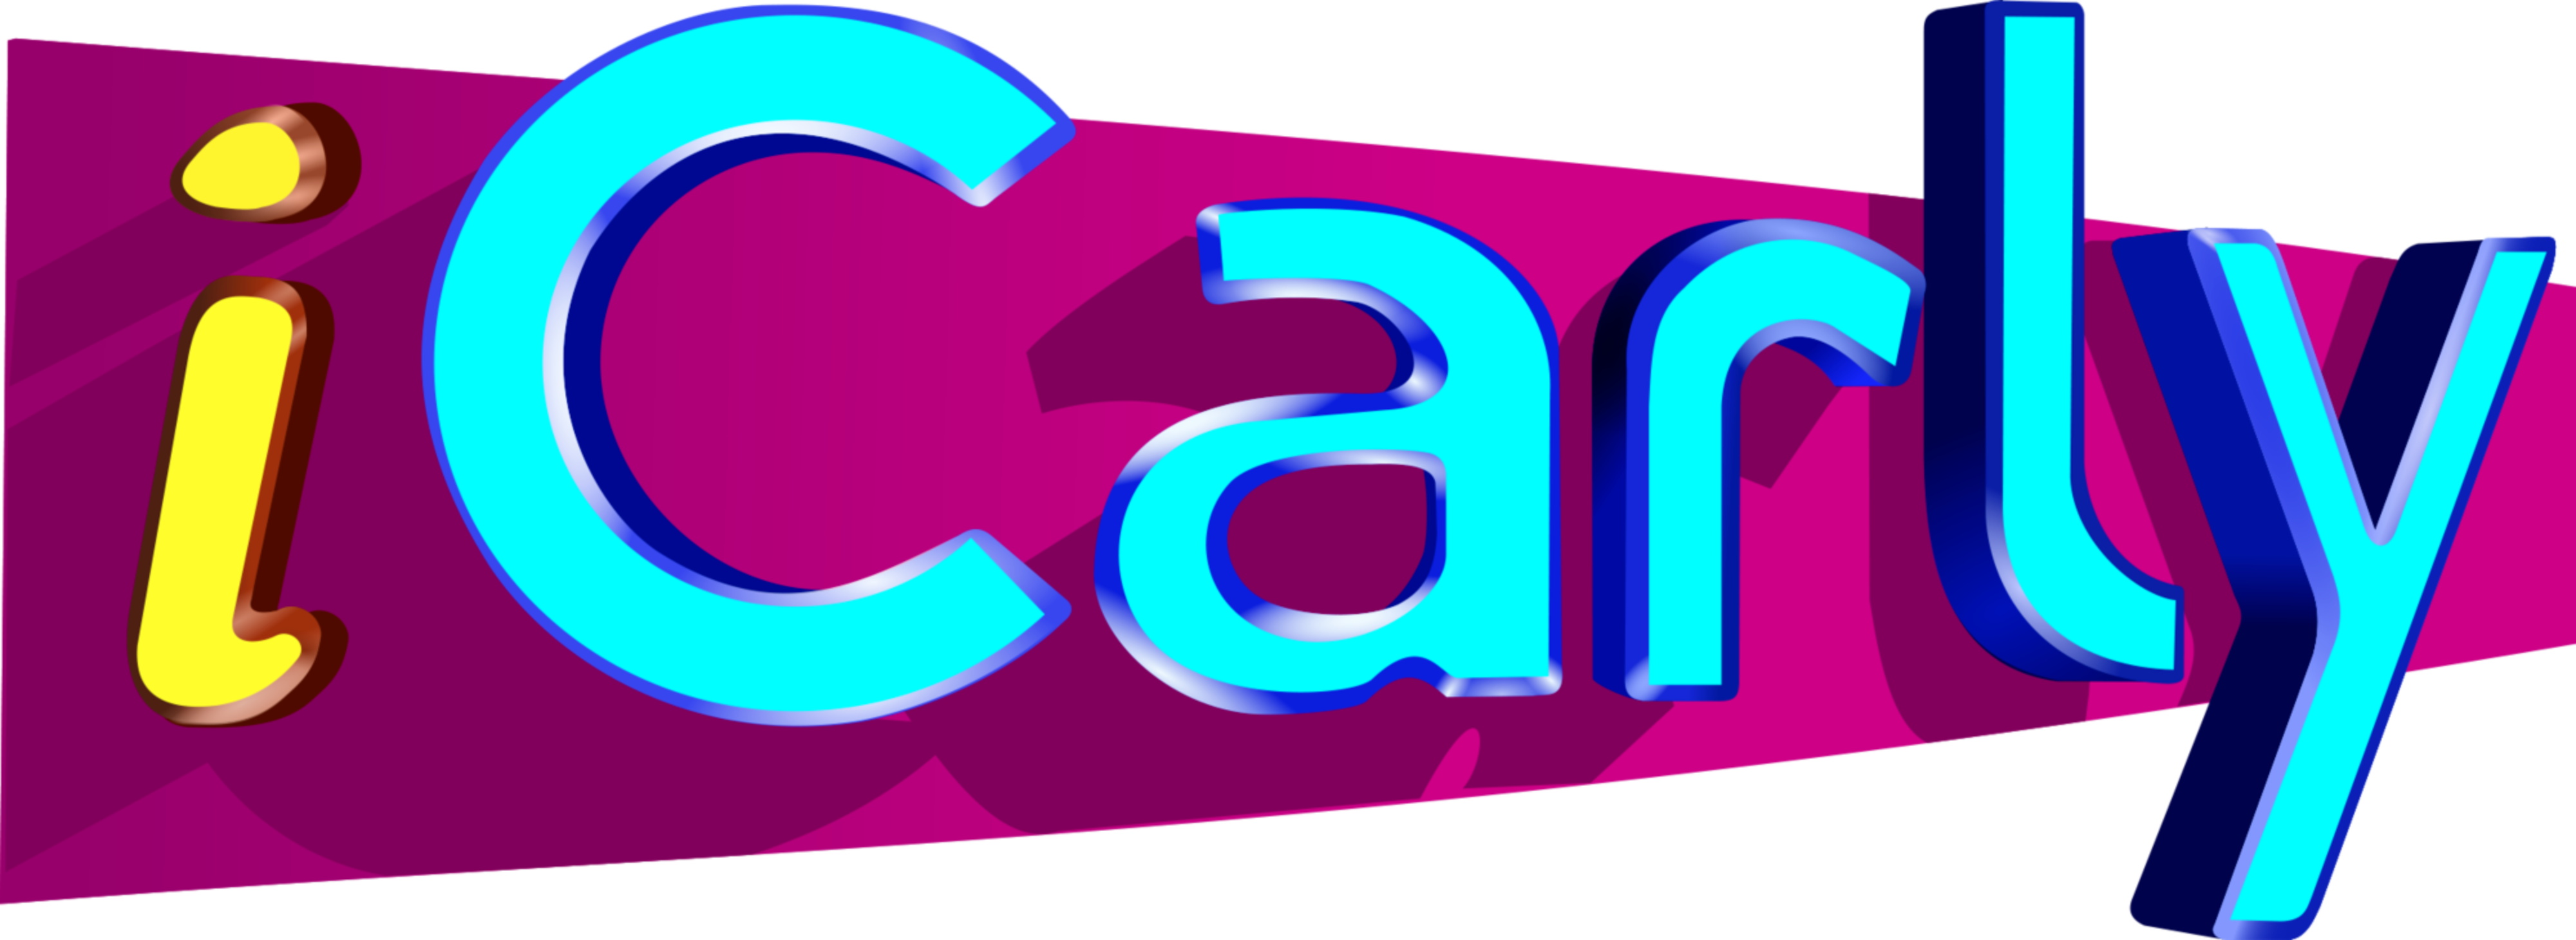 iCarly (13 DVD Box Set)